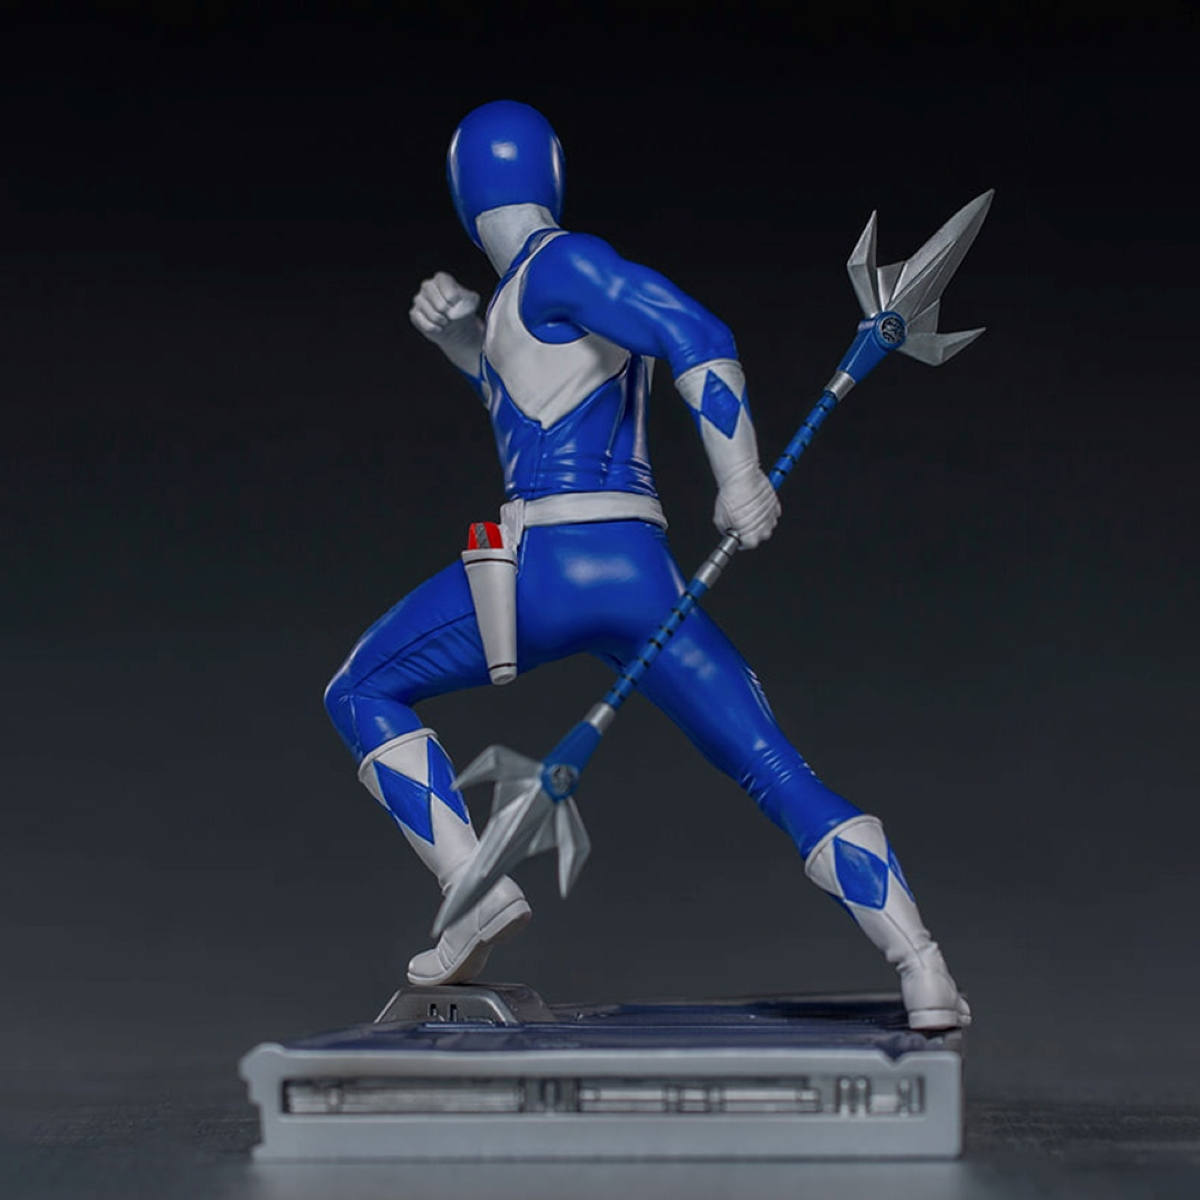 Sammelfigur STUDIOS Blue Power 1/10 - IRON Rangers Statue Ranger